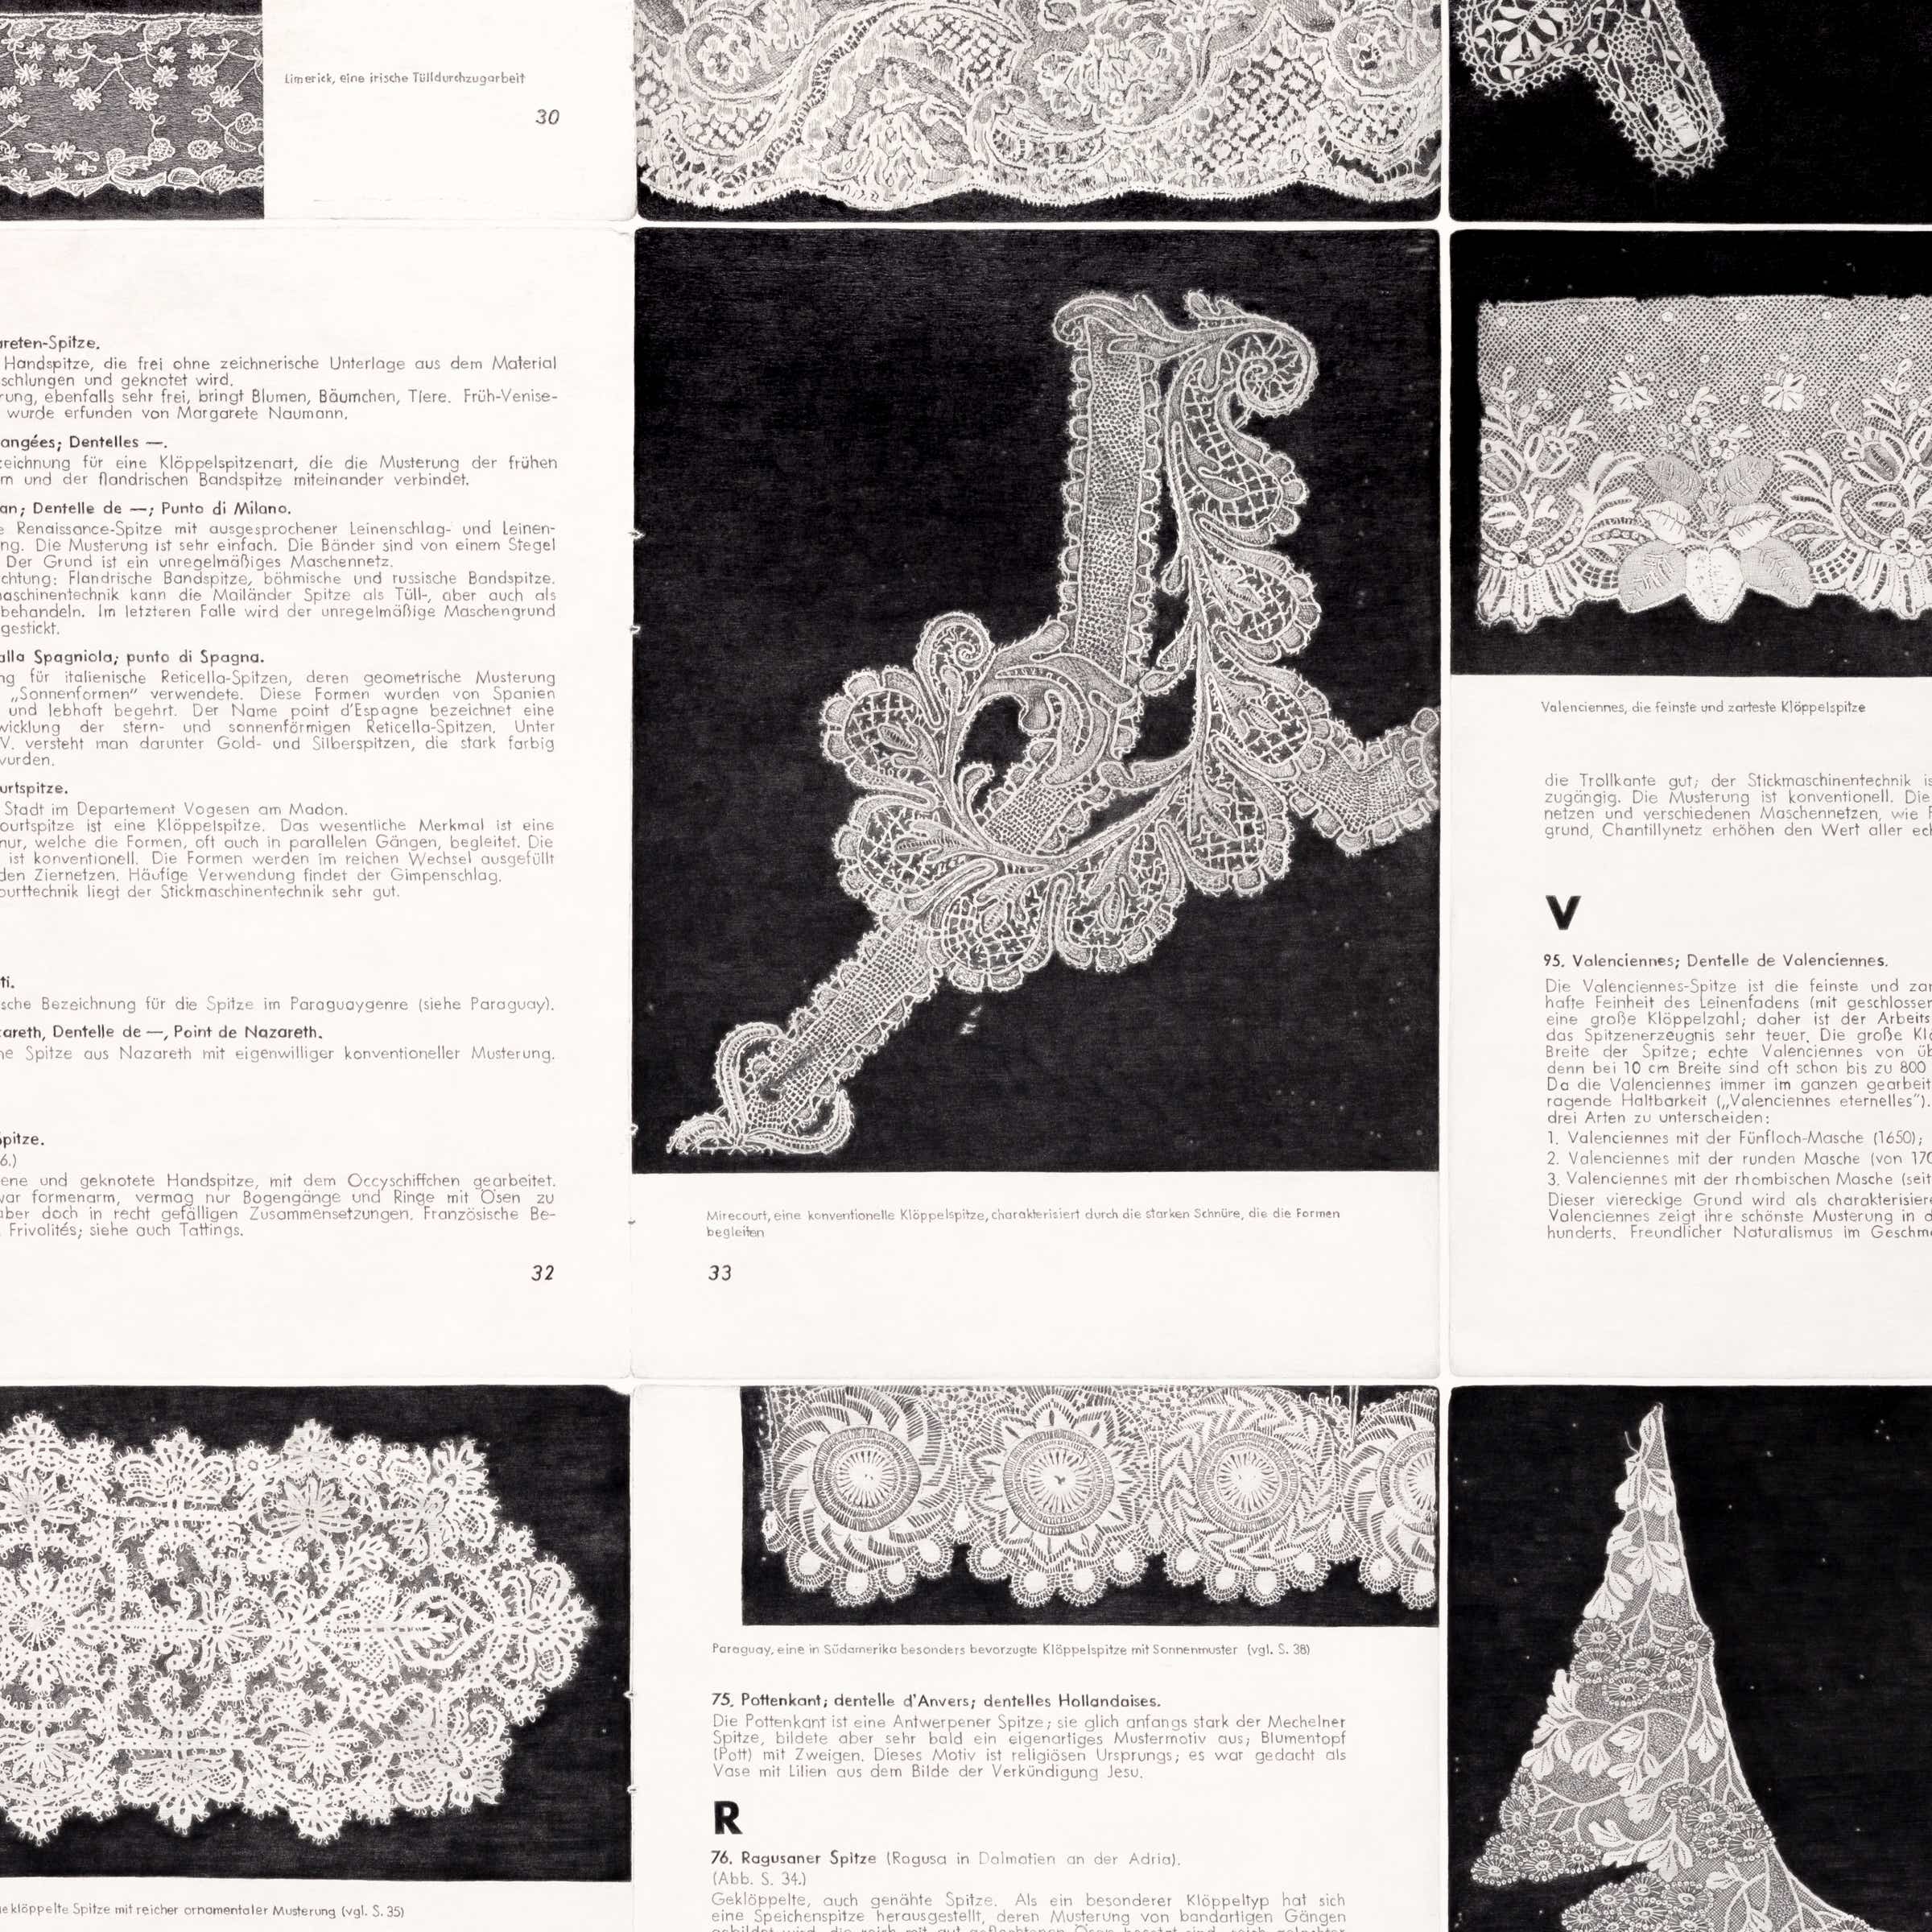 Pencil drawing of the 38 part series »Spitzenwaren« [Lace Goods] by Herbert Stattler.